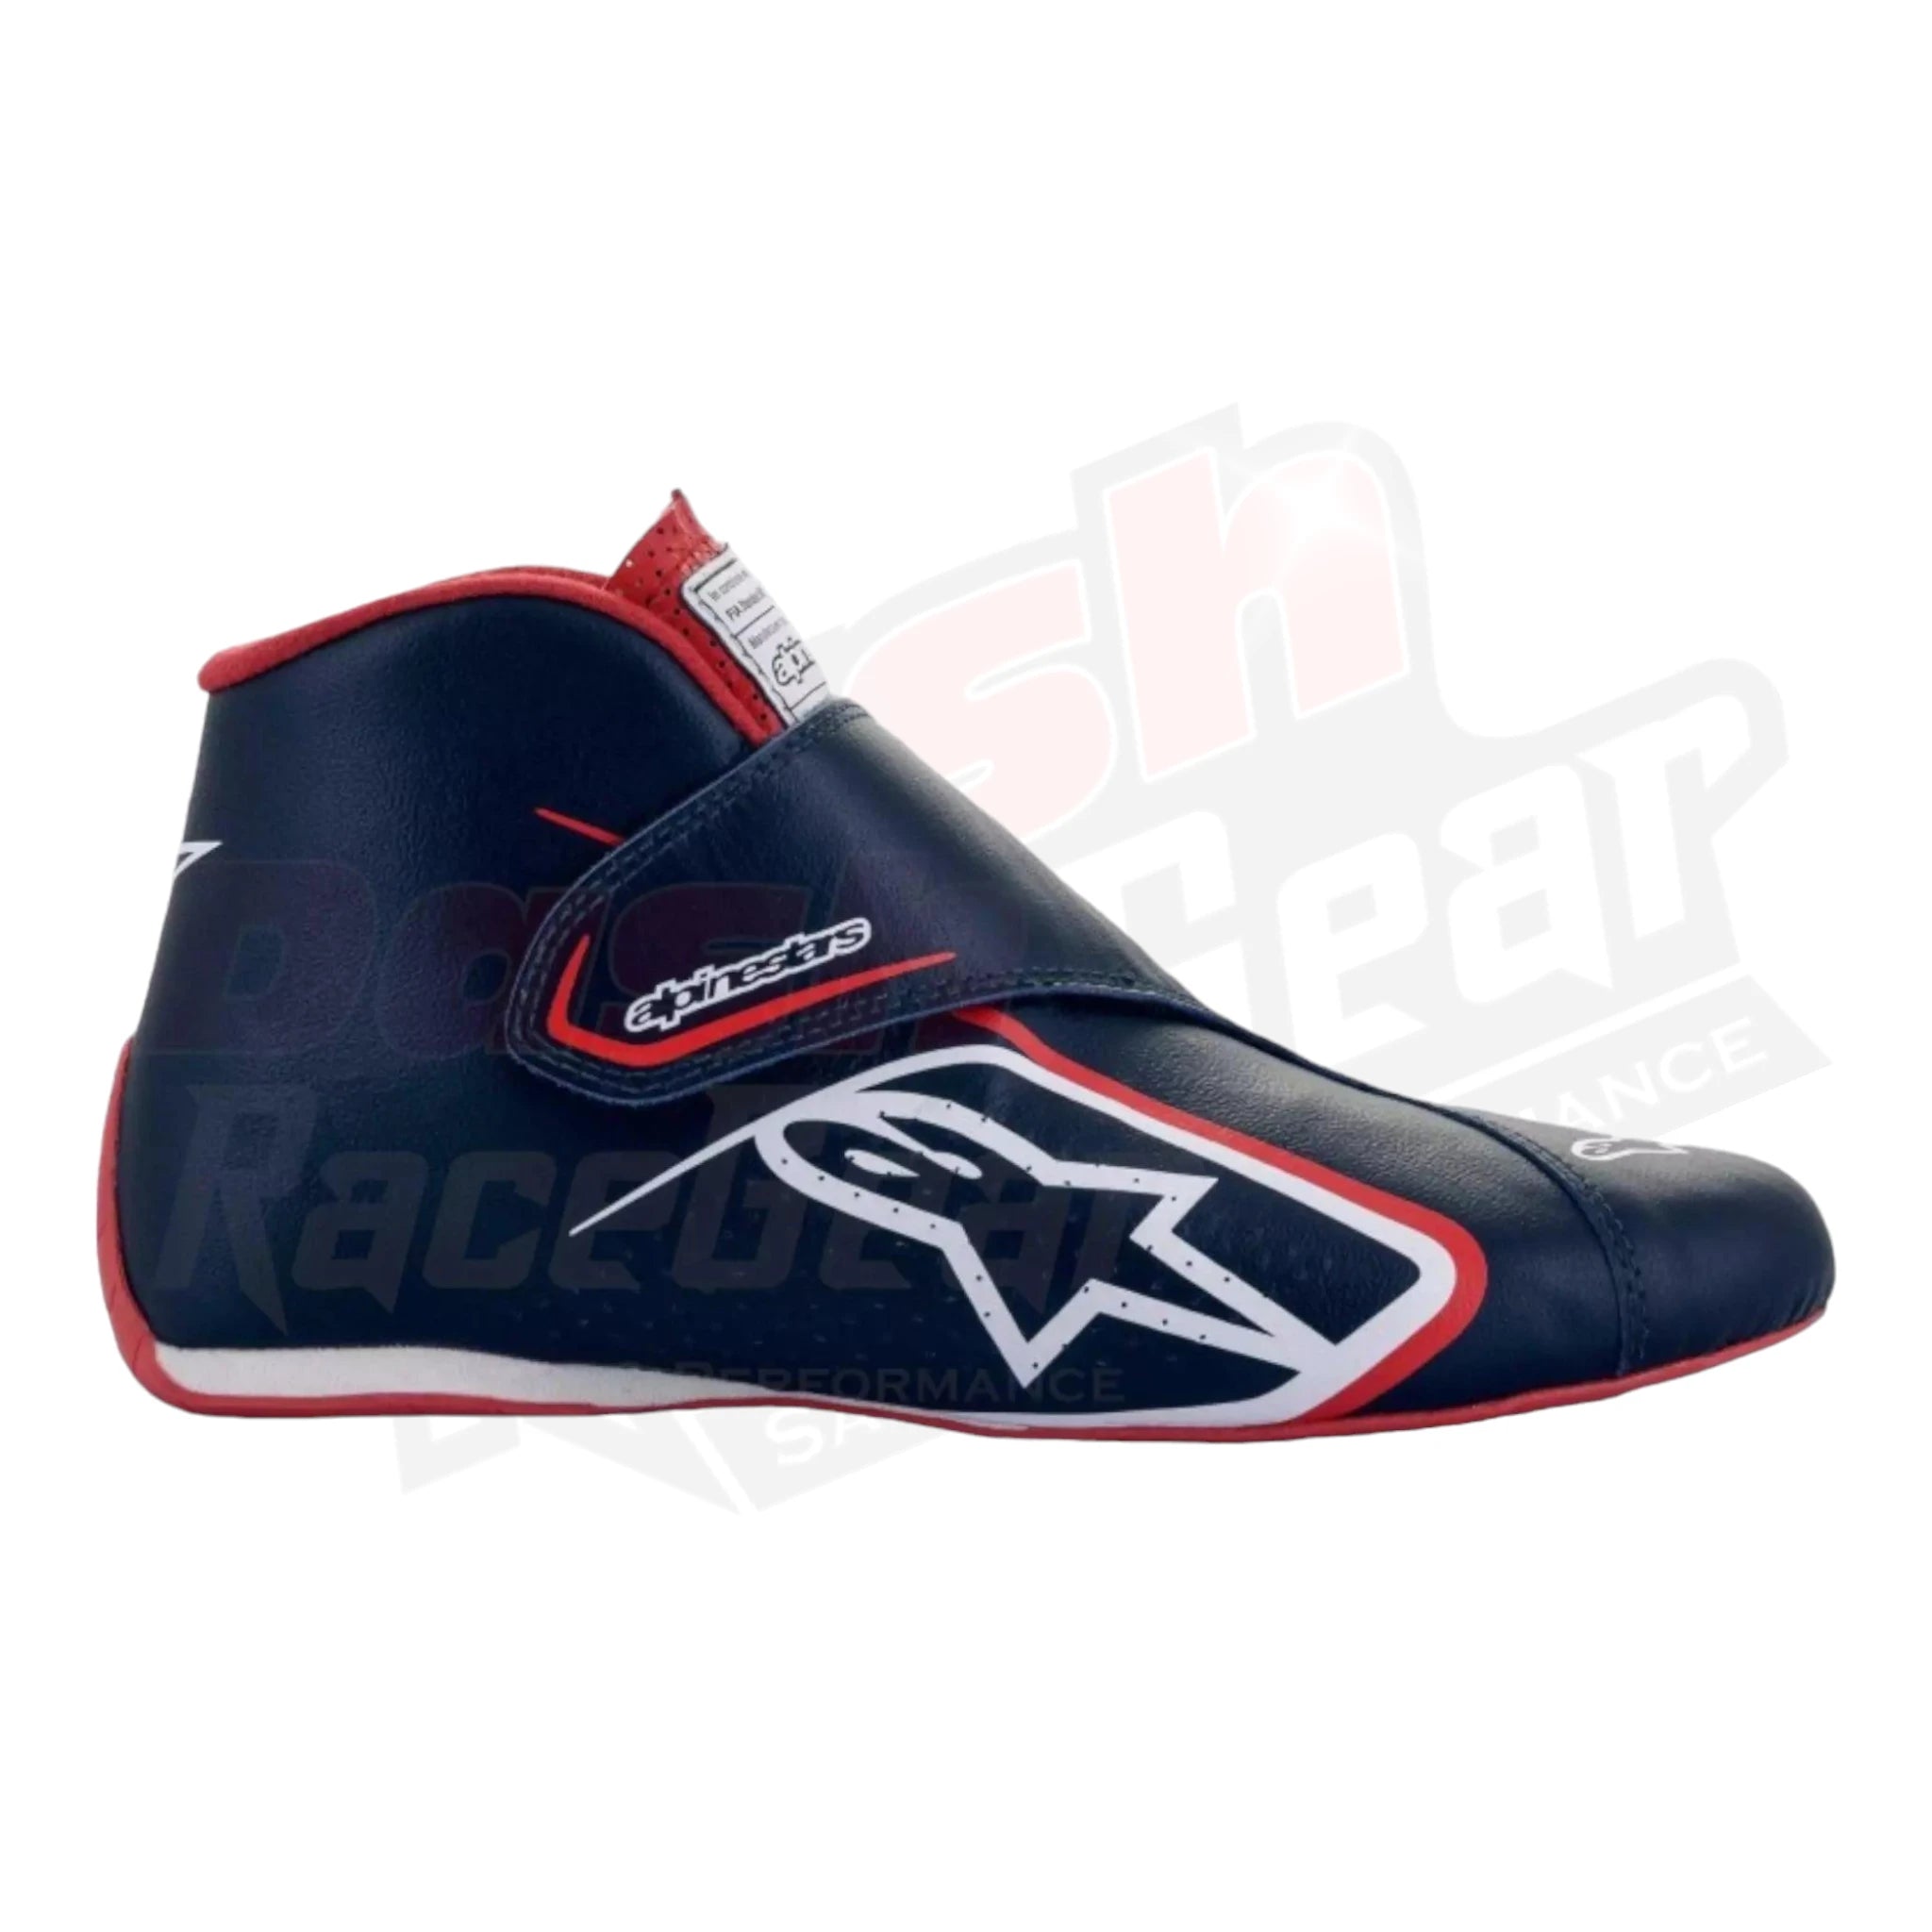 2015 Carlos Sainz Alpinestar F1 Race boots